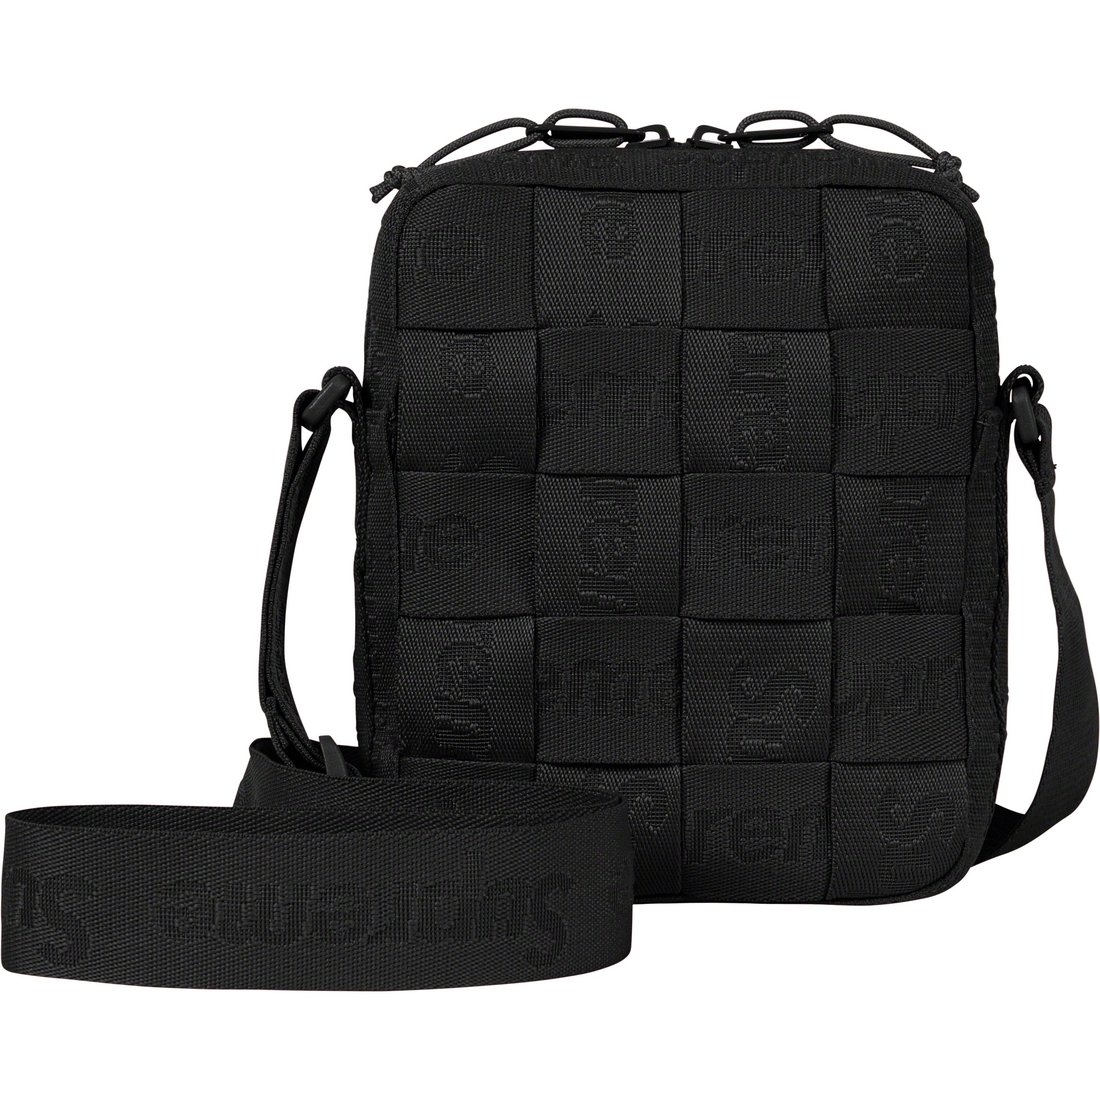 Details on Woven Shoulder Bag Black from spring summer
                                                    2023 (Price is $78)